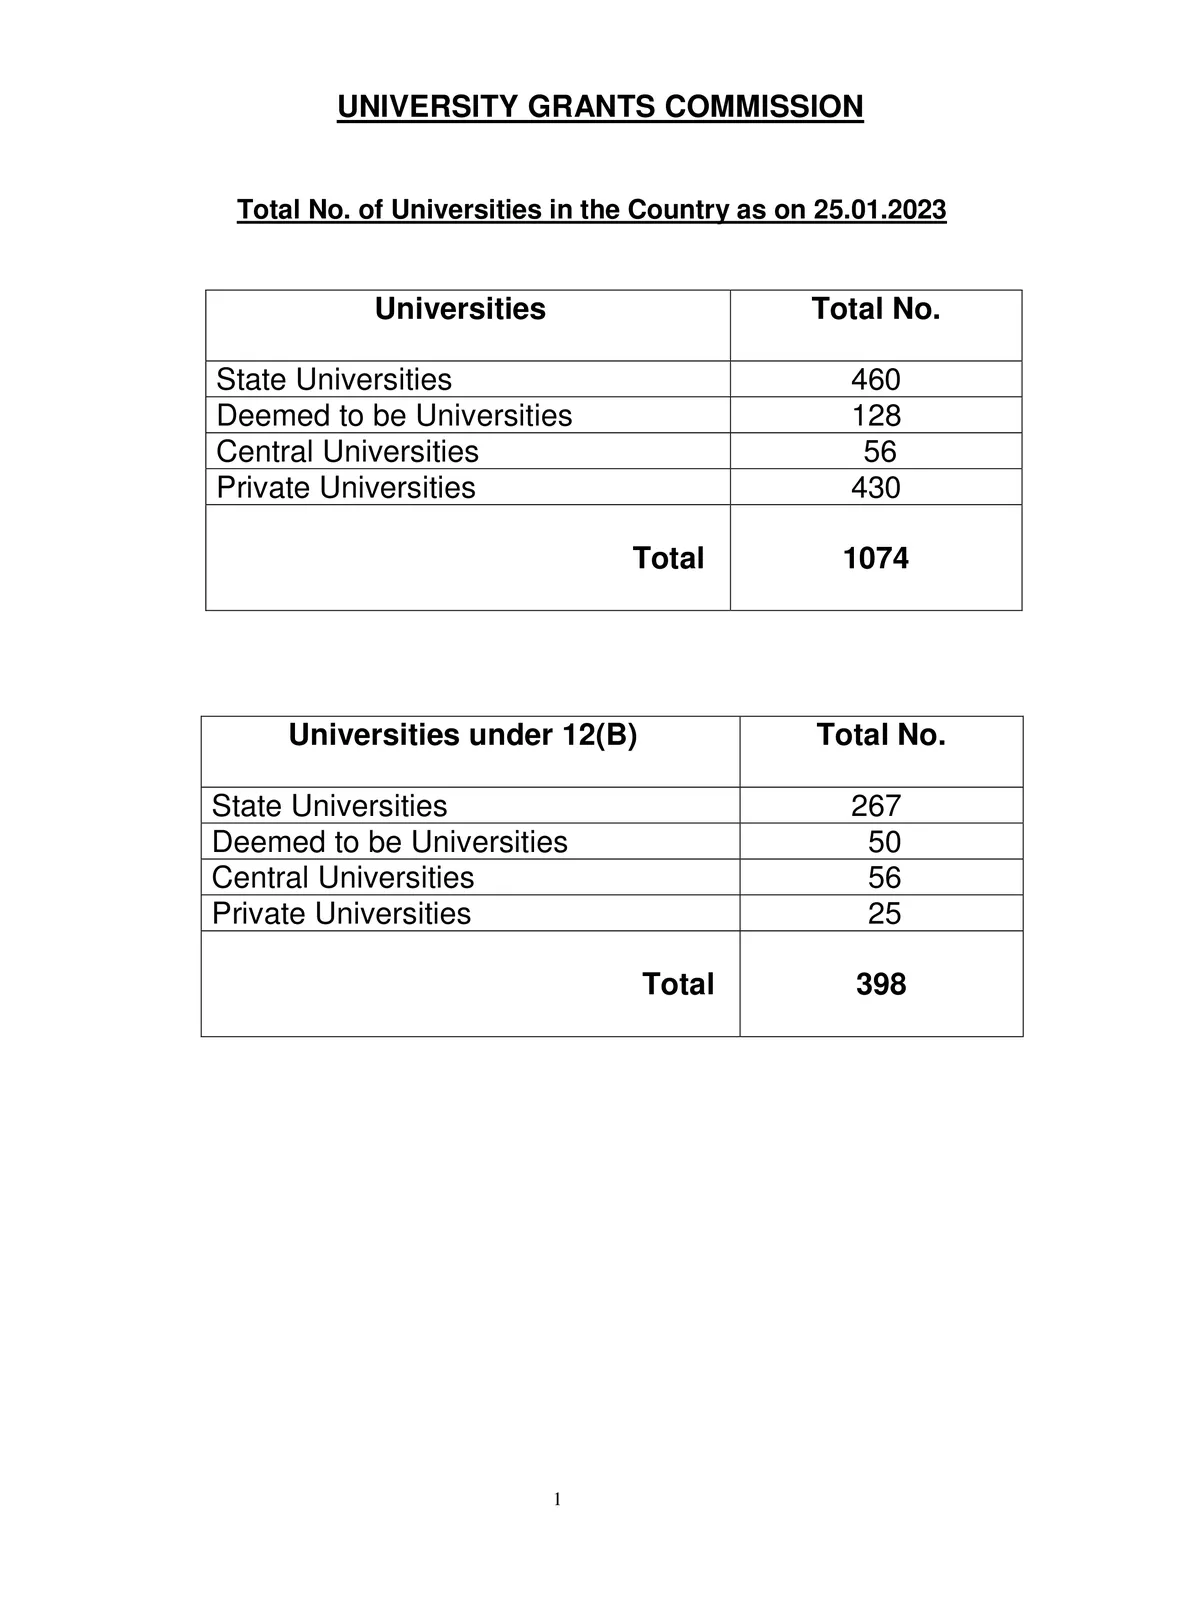 UGC University List 2023